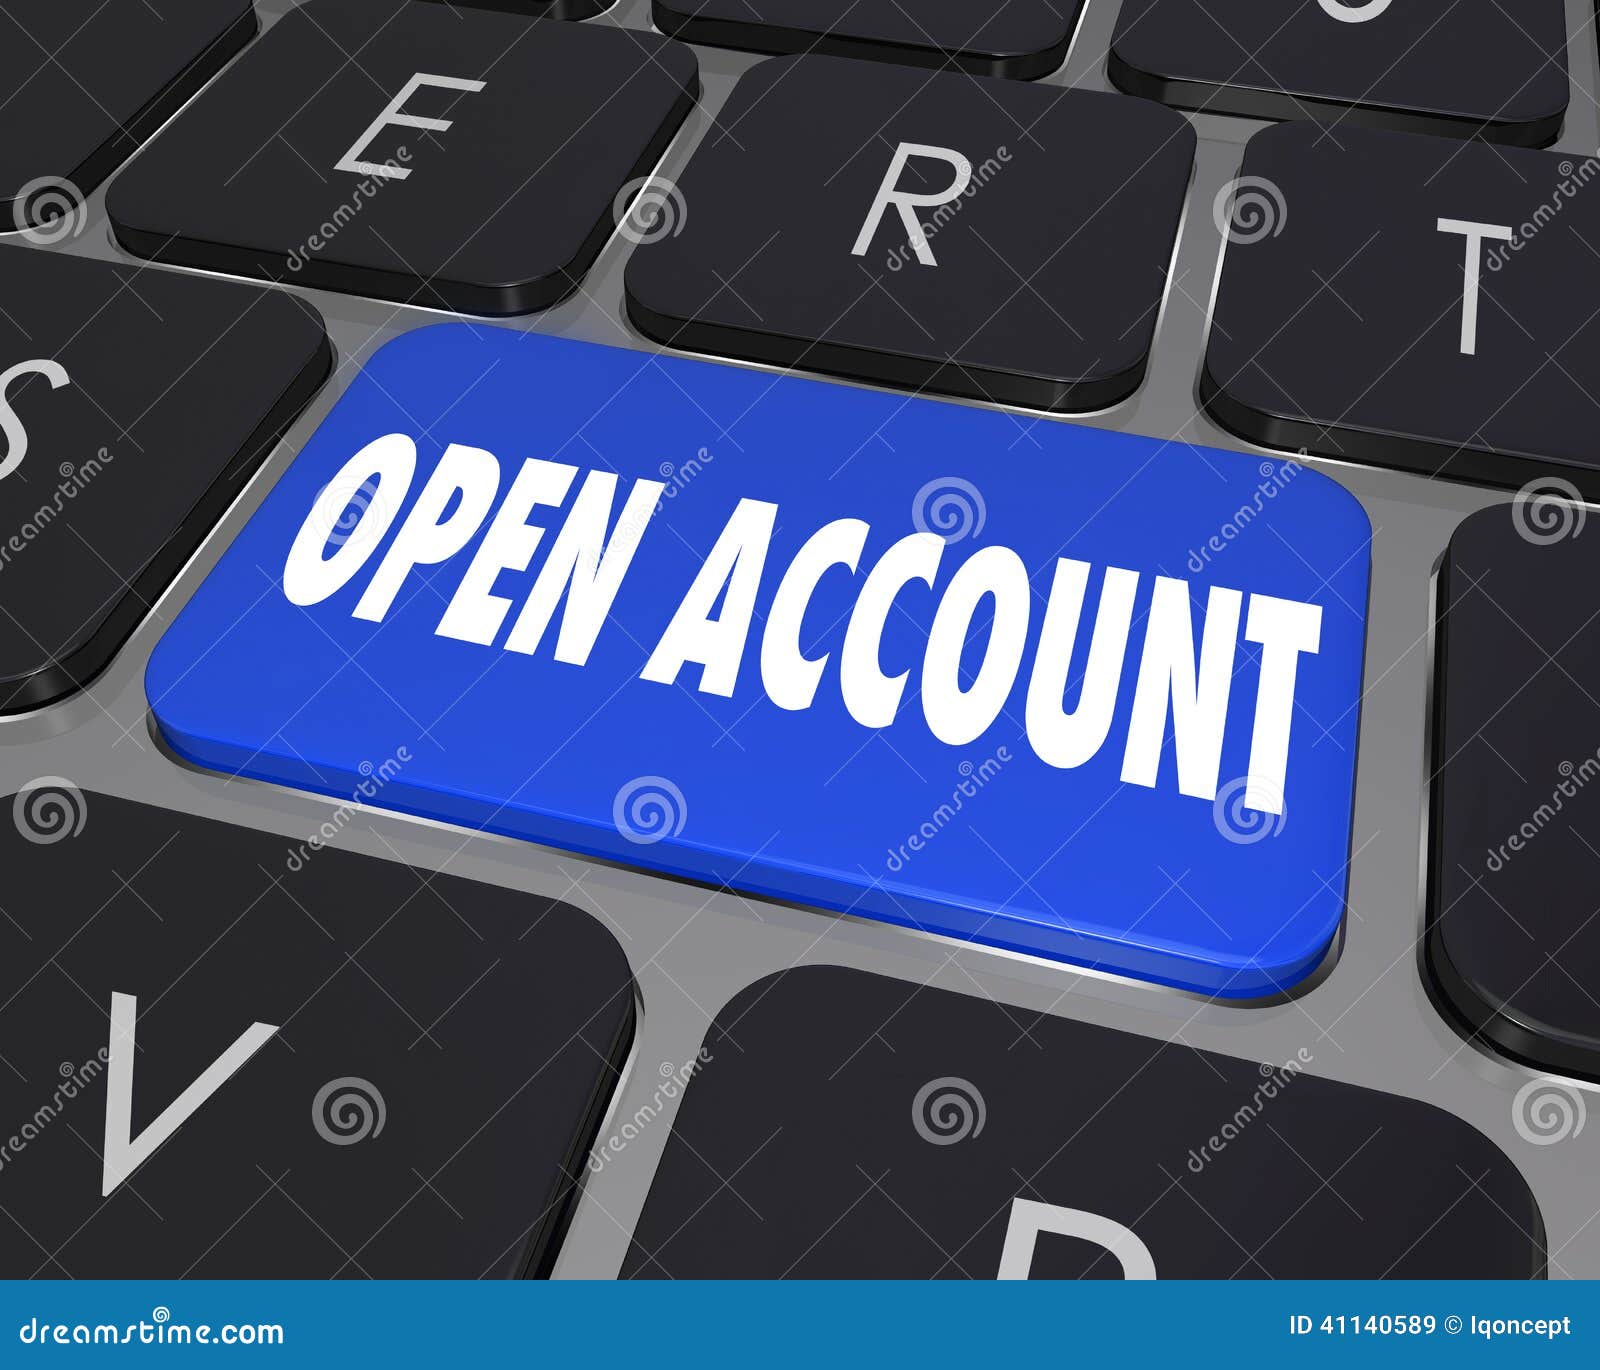 Open New Account Computer Keyboard Key Stock Illustration ...